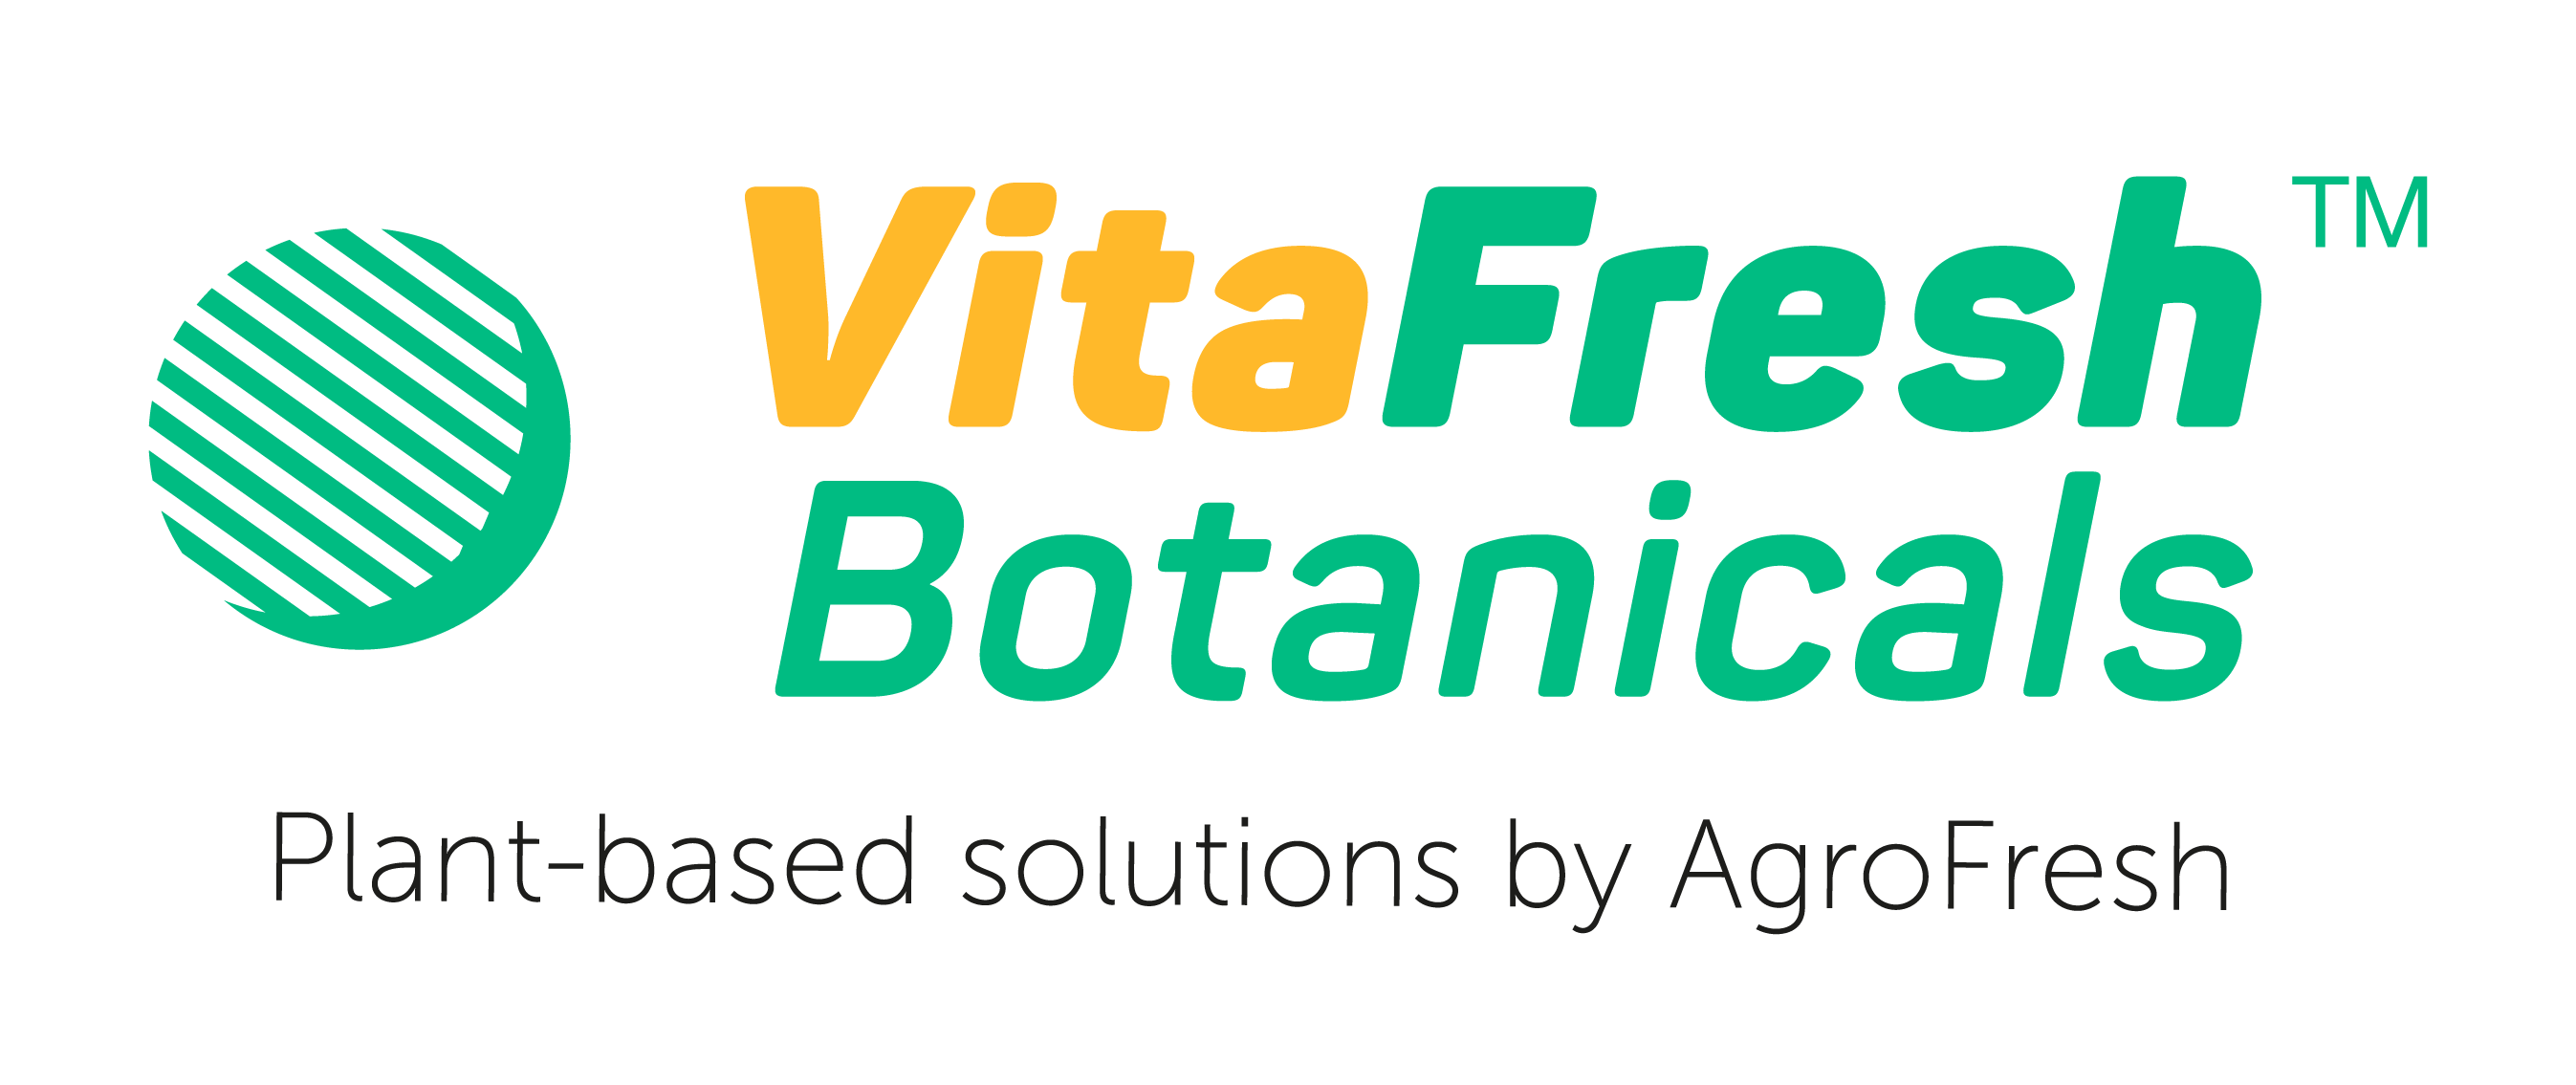 VitaFresh Botanicals